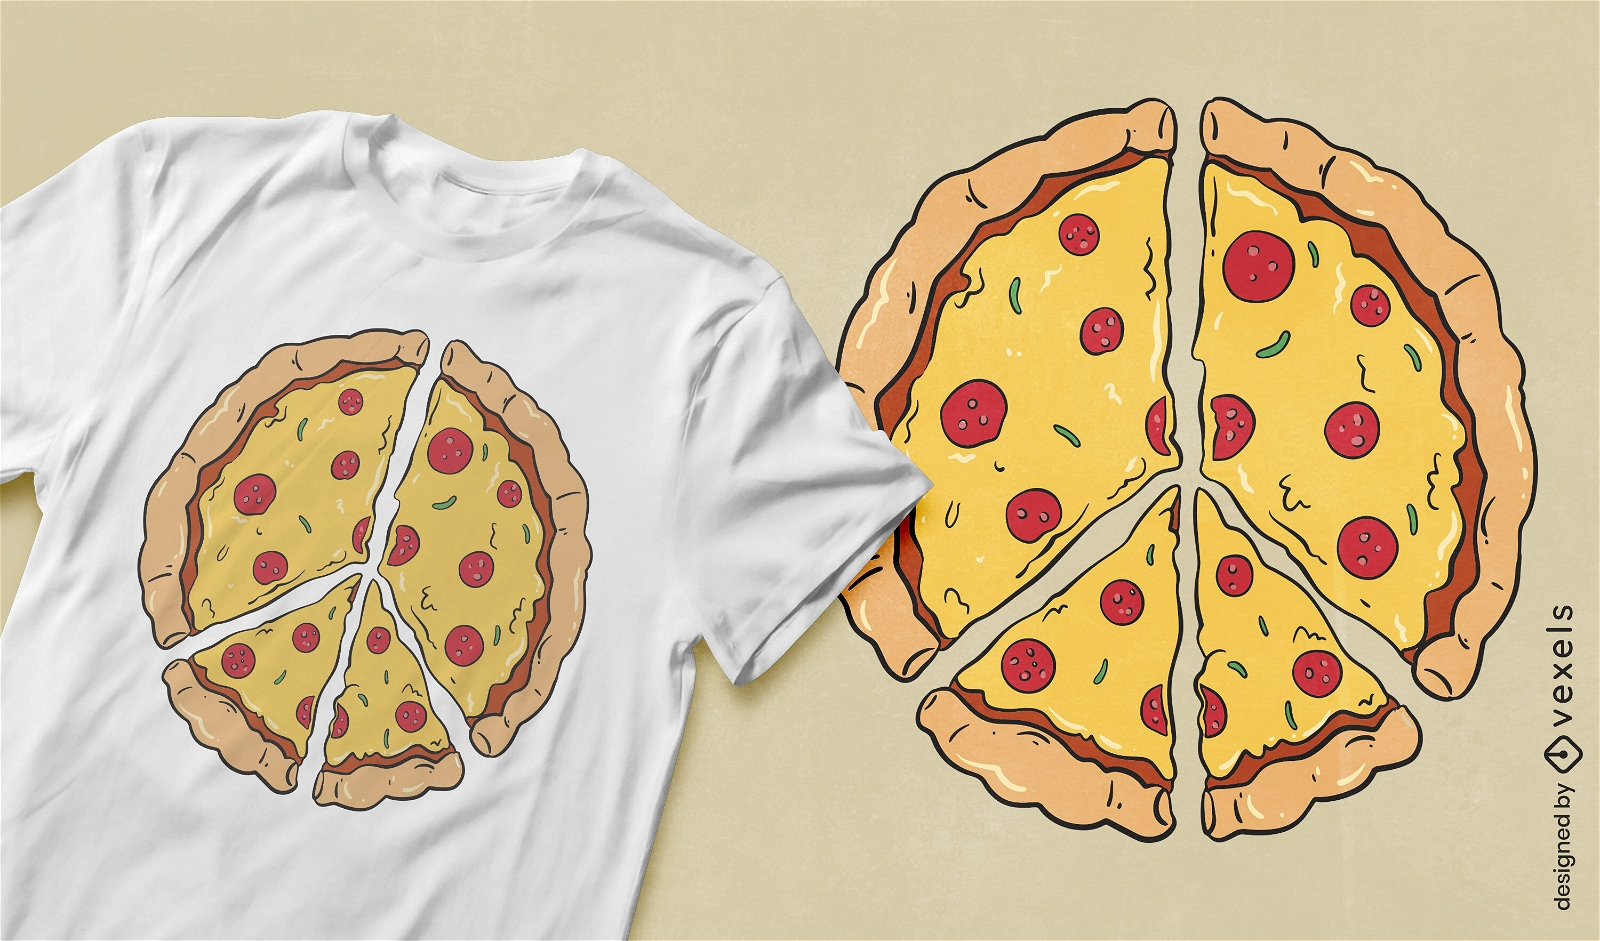 Peace pizza t-shirt design